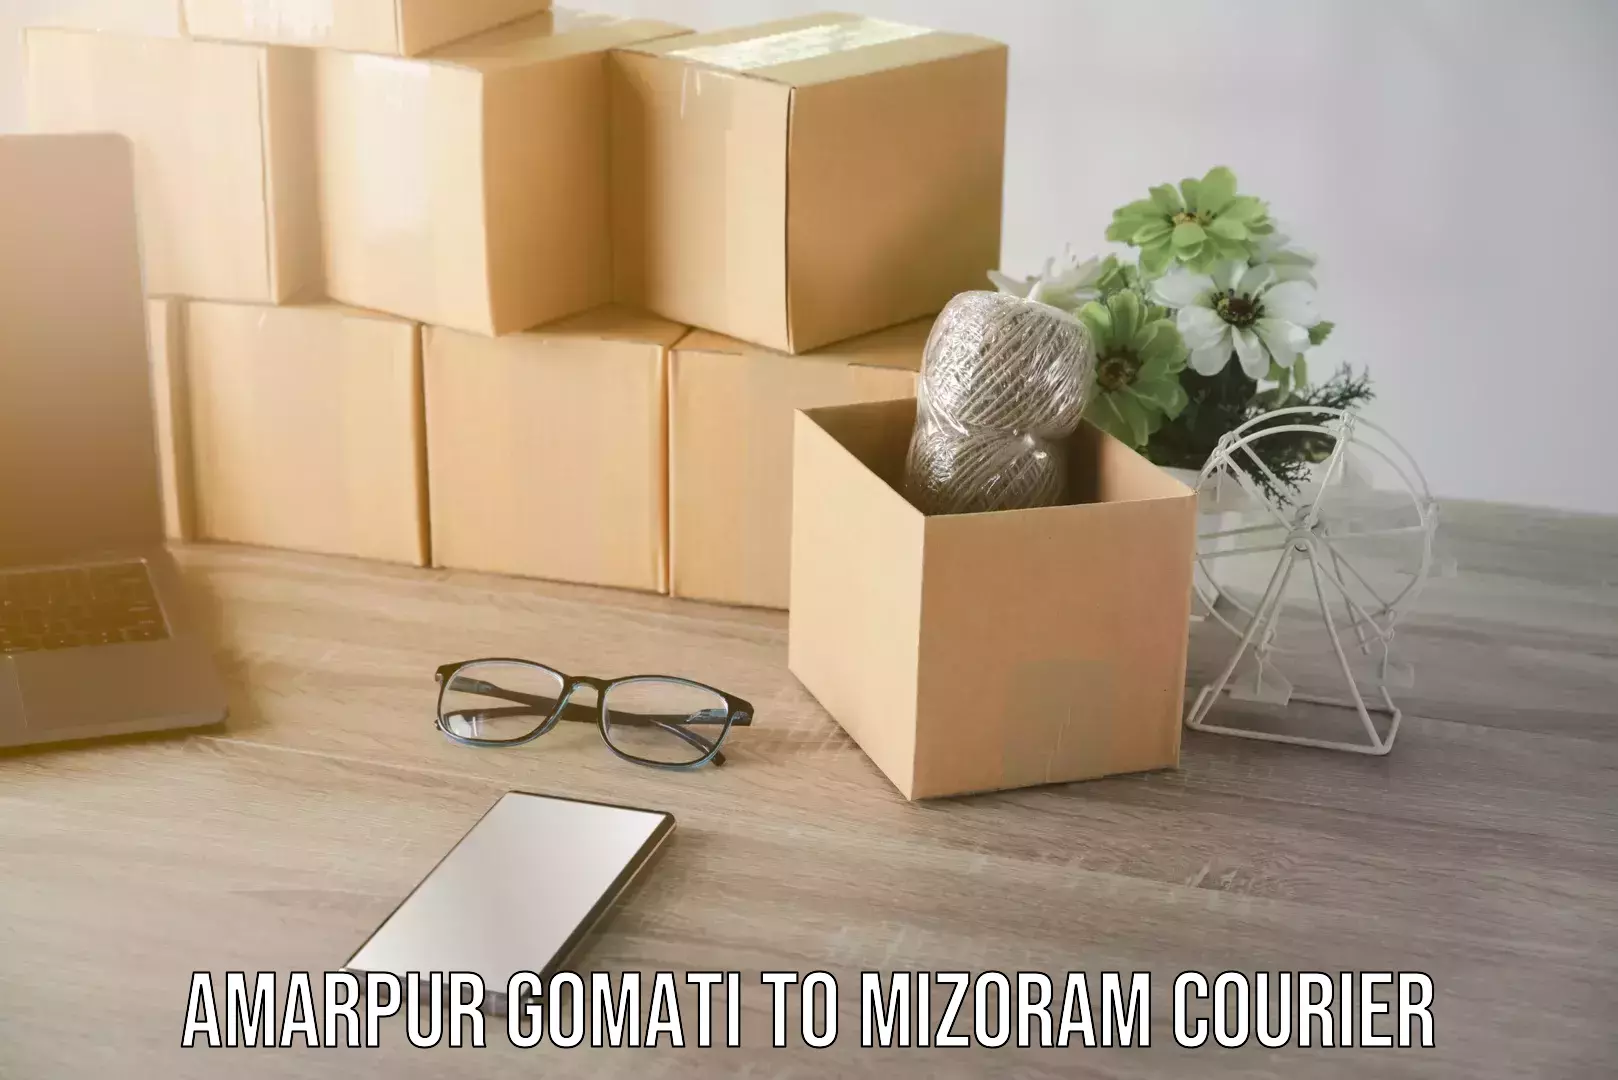 Courier service booking Amarpur Gomati to Mizoram